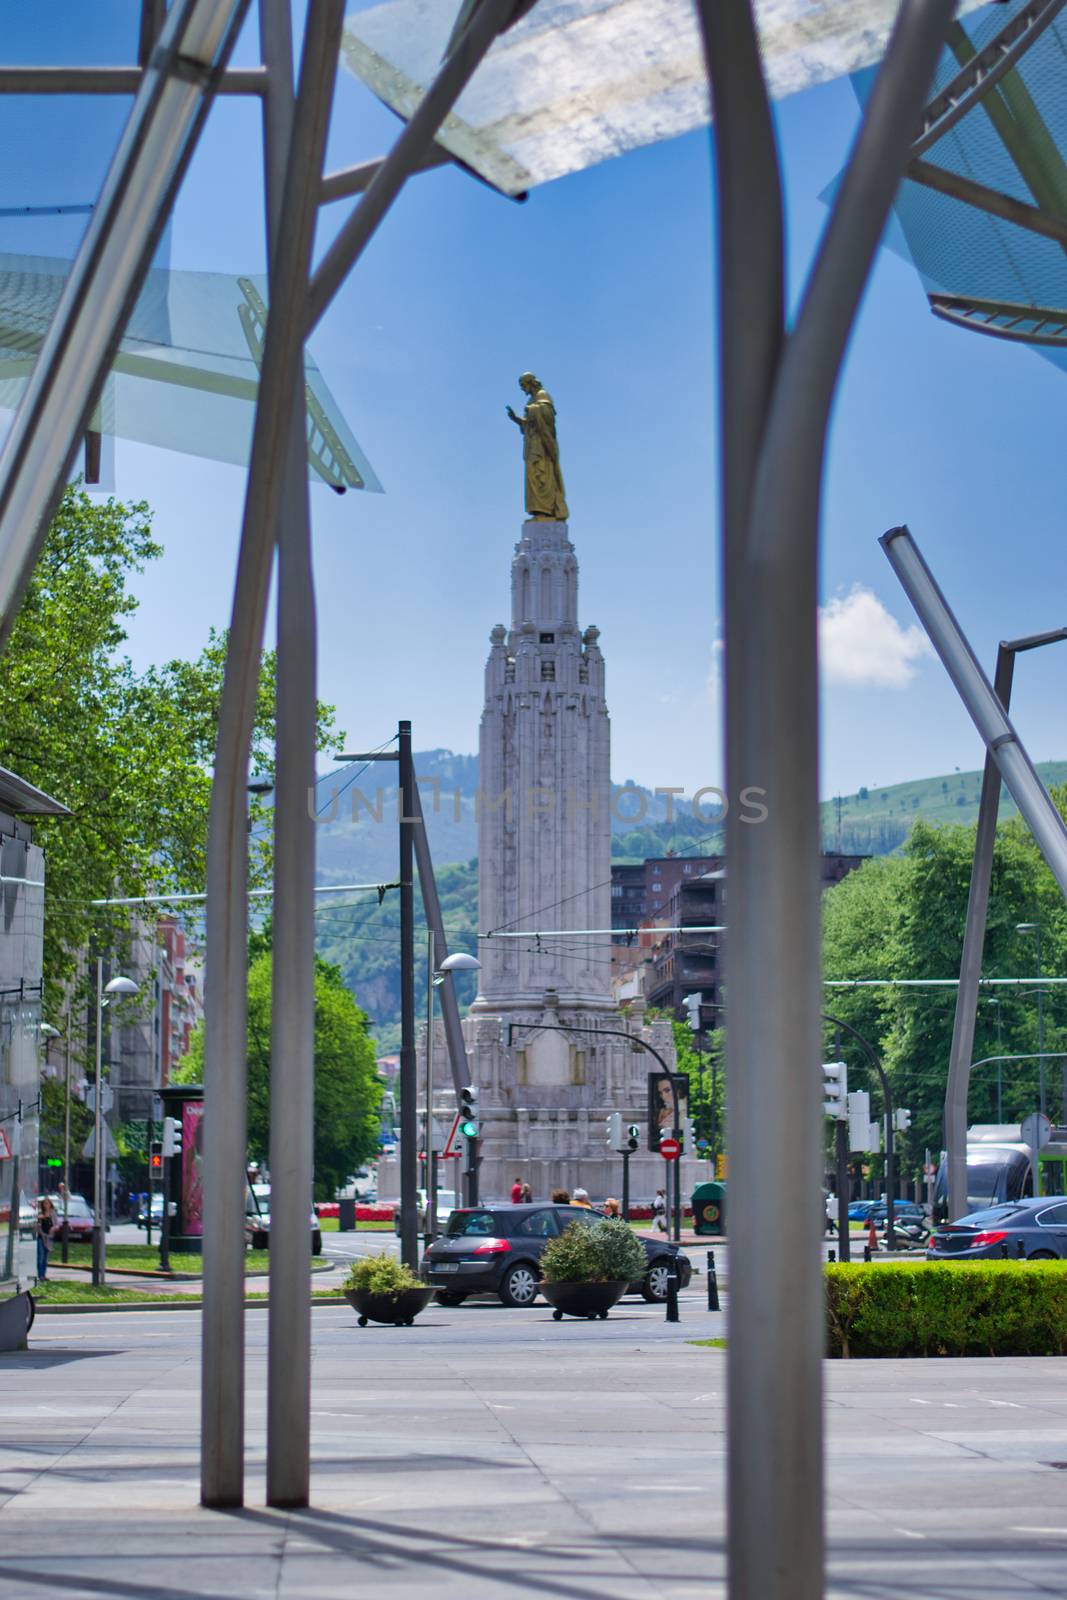 Bilbao, Spain, May 2012: View on Monumento al Sagrado Corazon de Jesus statue at Jesusen Bihotza Plaza in Bilbao, Spain.